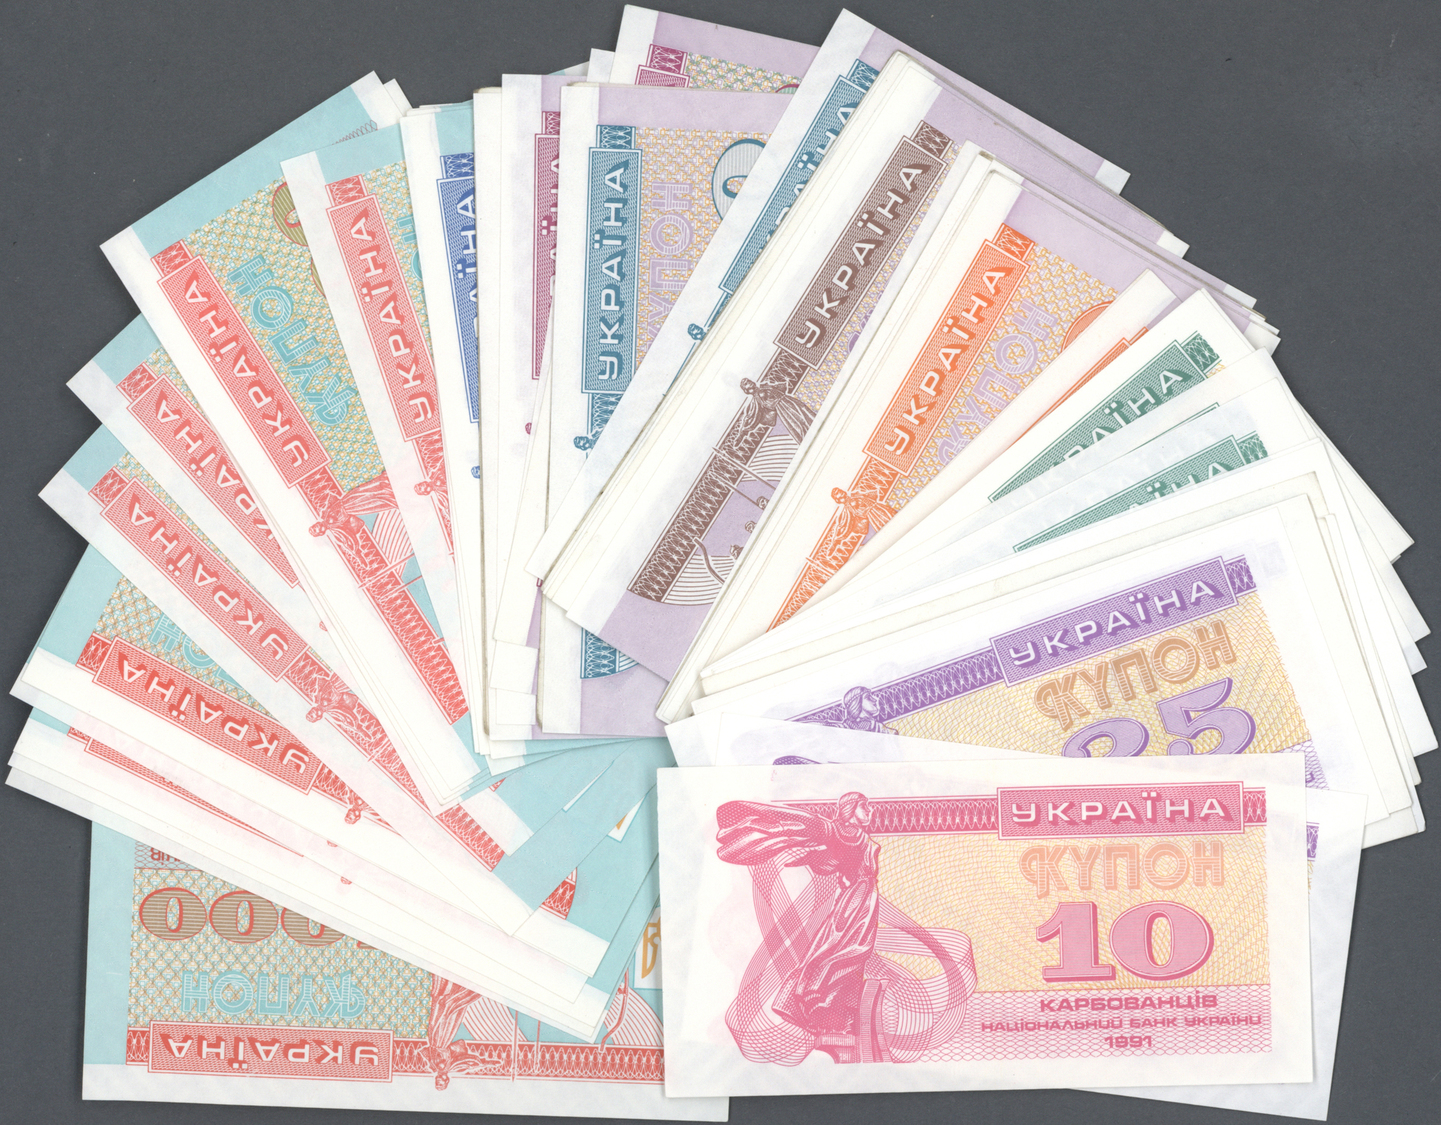 03750 Ukraina / Ukraine: huge set with 337 Banknotes of the Ukrainian National Bank issues 1991 - 1995, containing 27 x